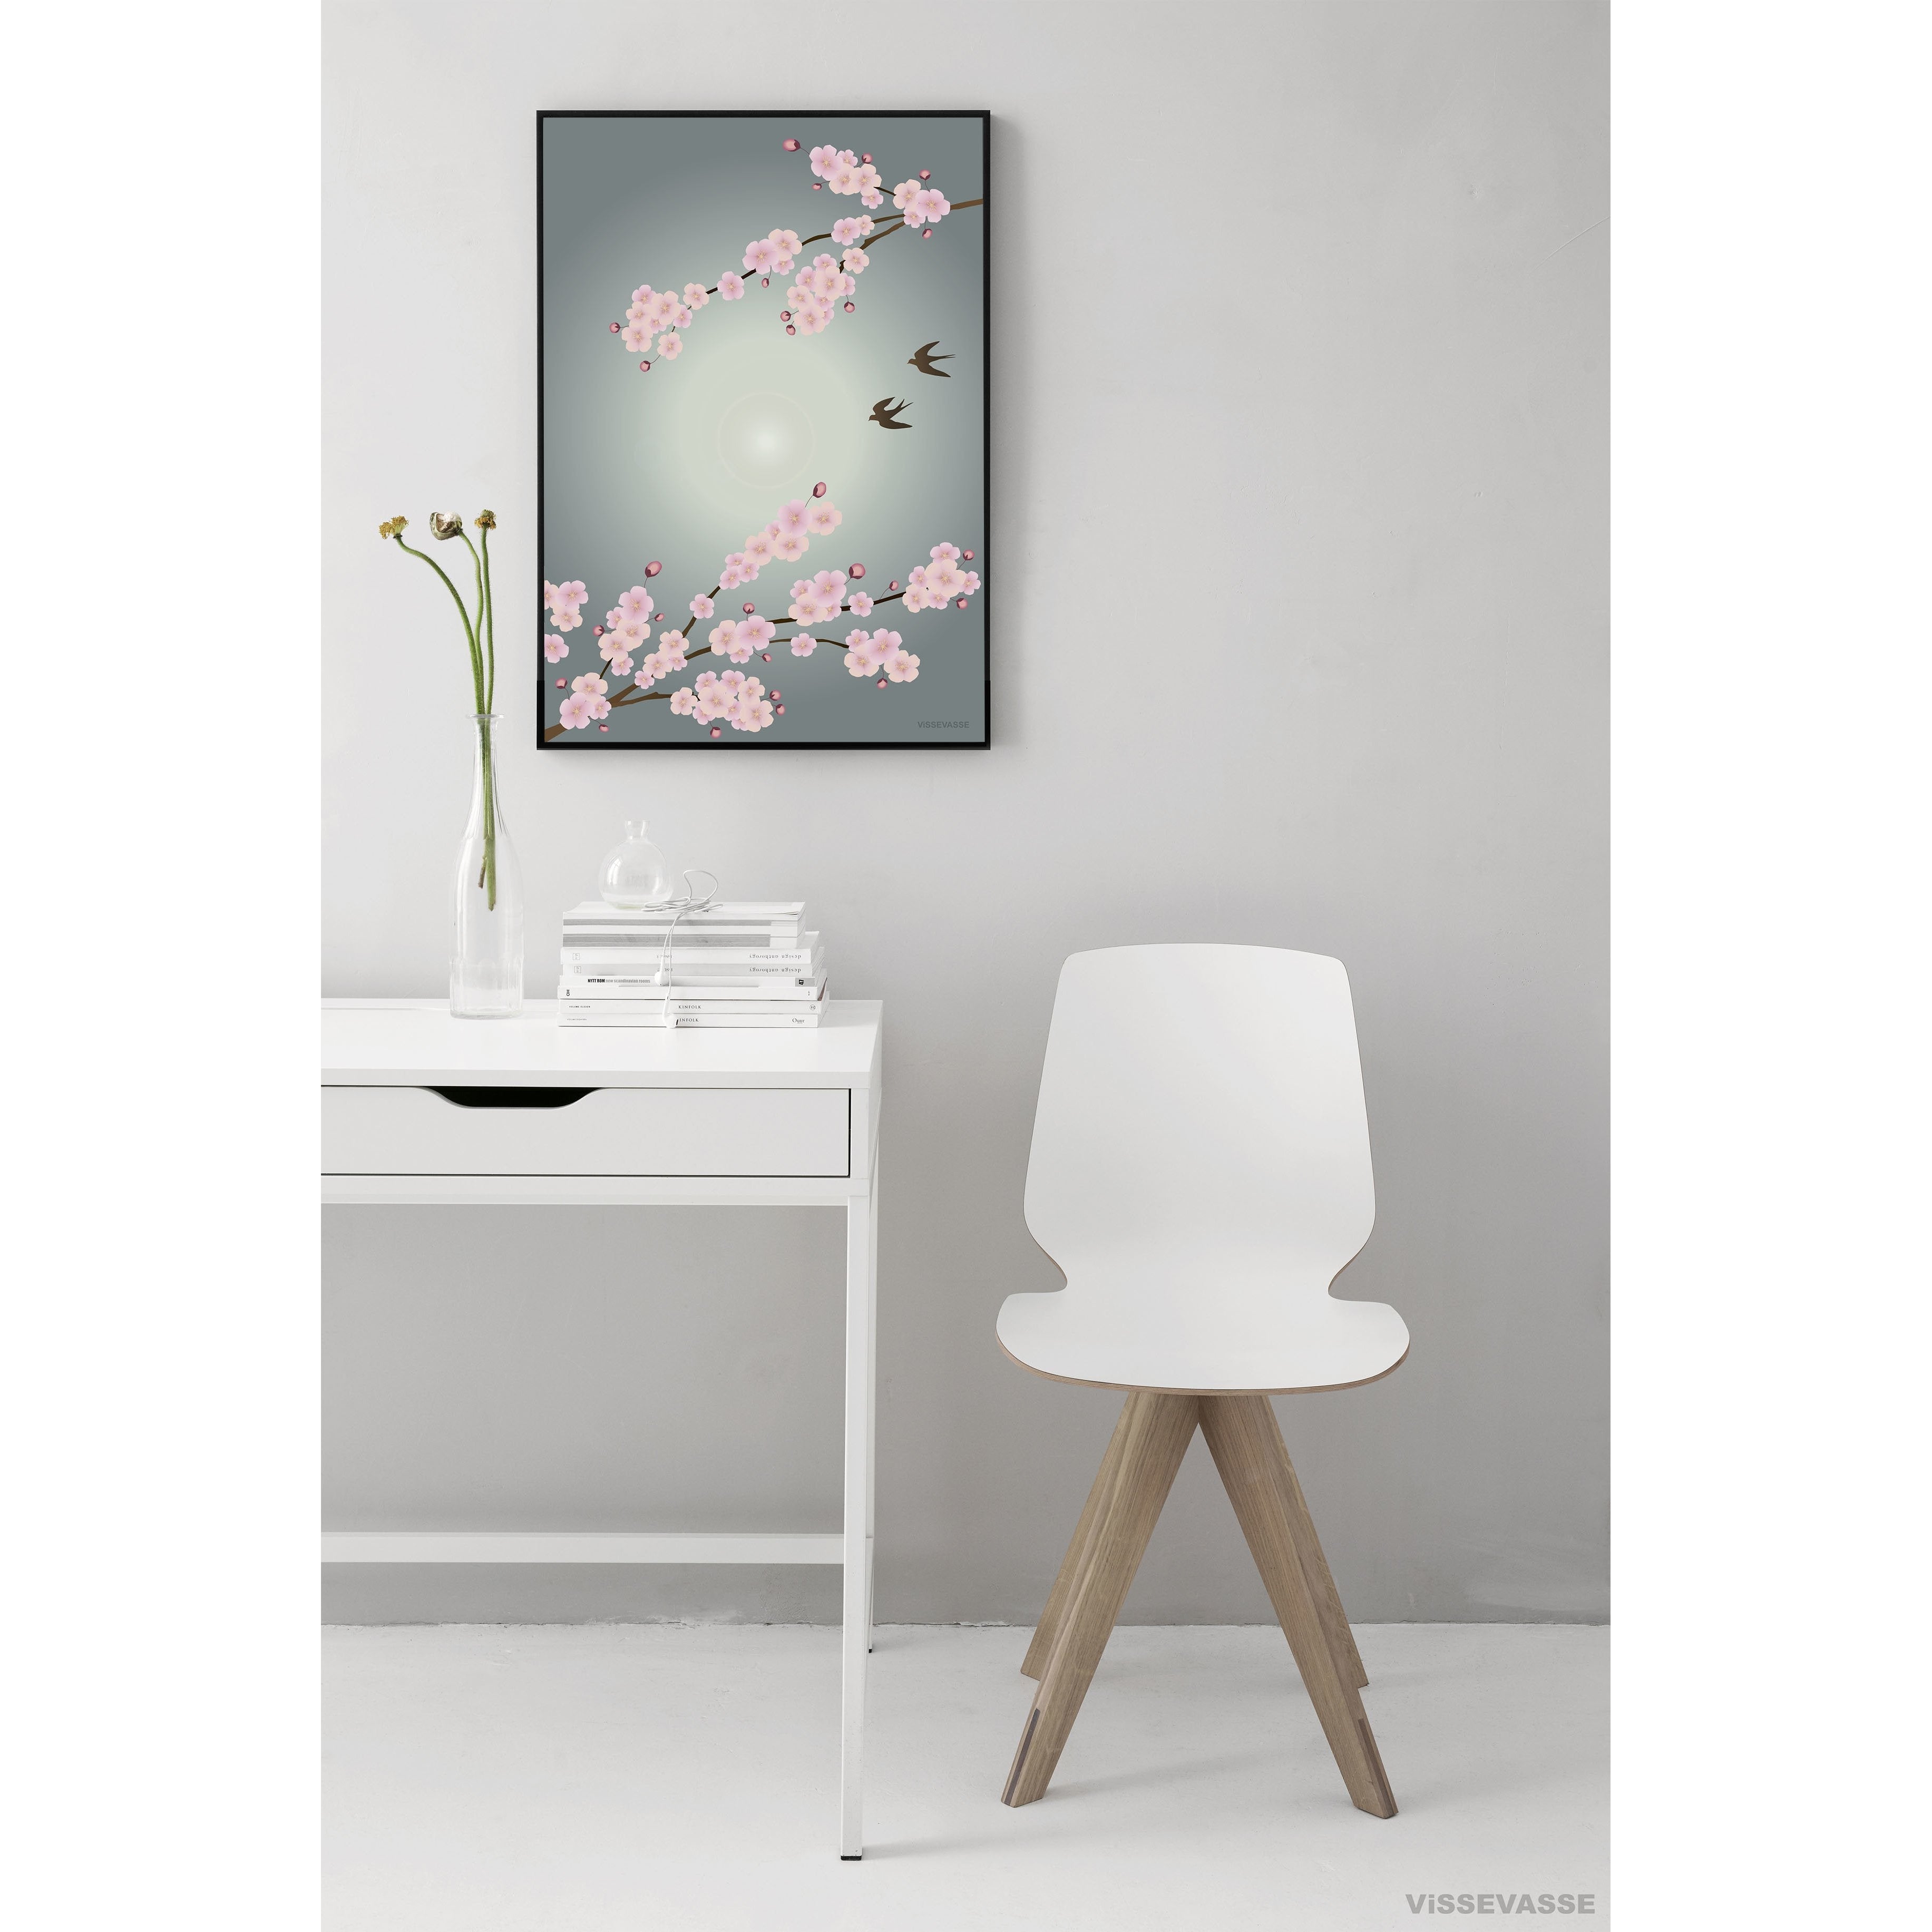 Plakat Vissevasse Sakura, 15 x 21 cm